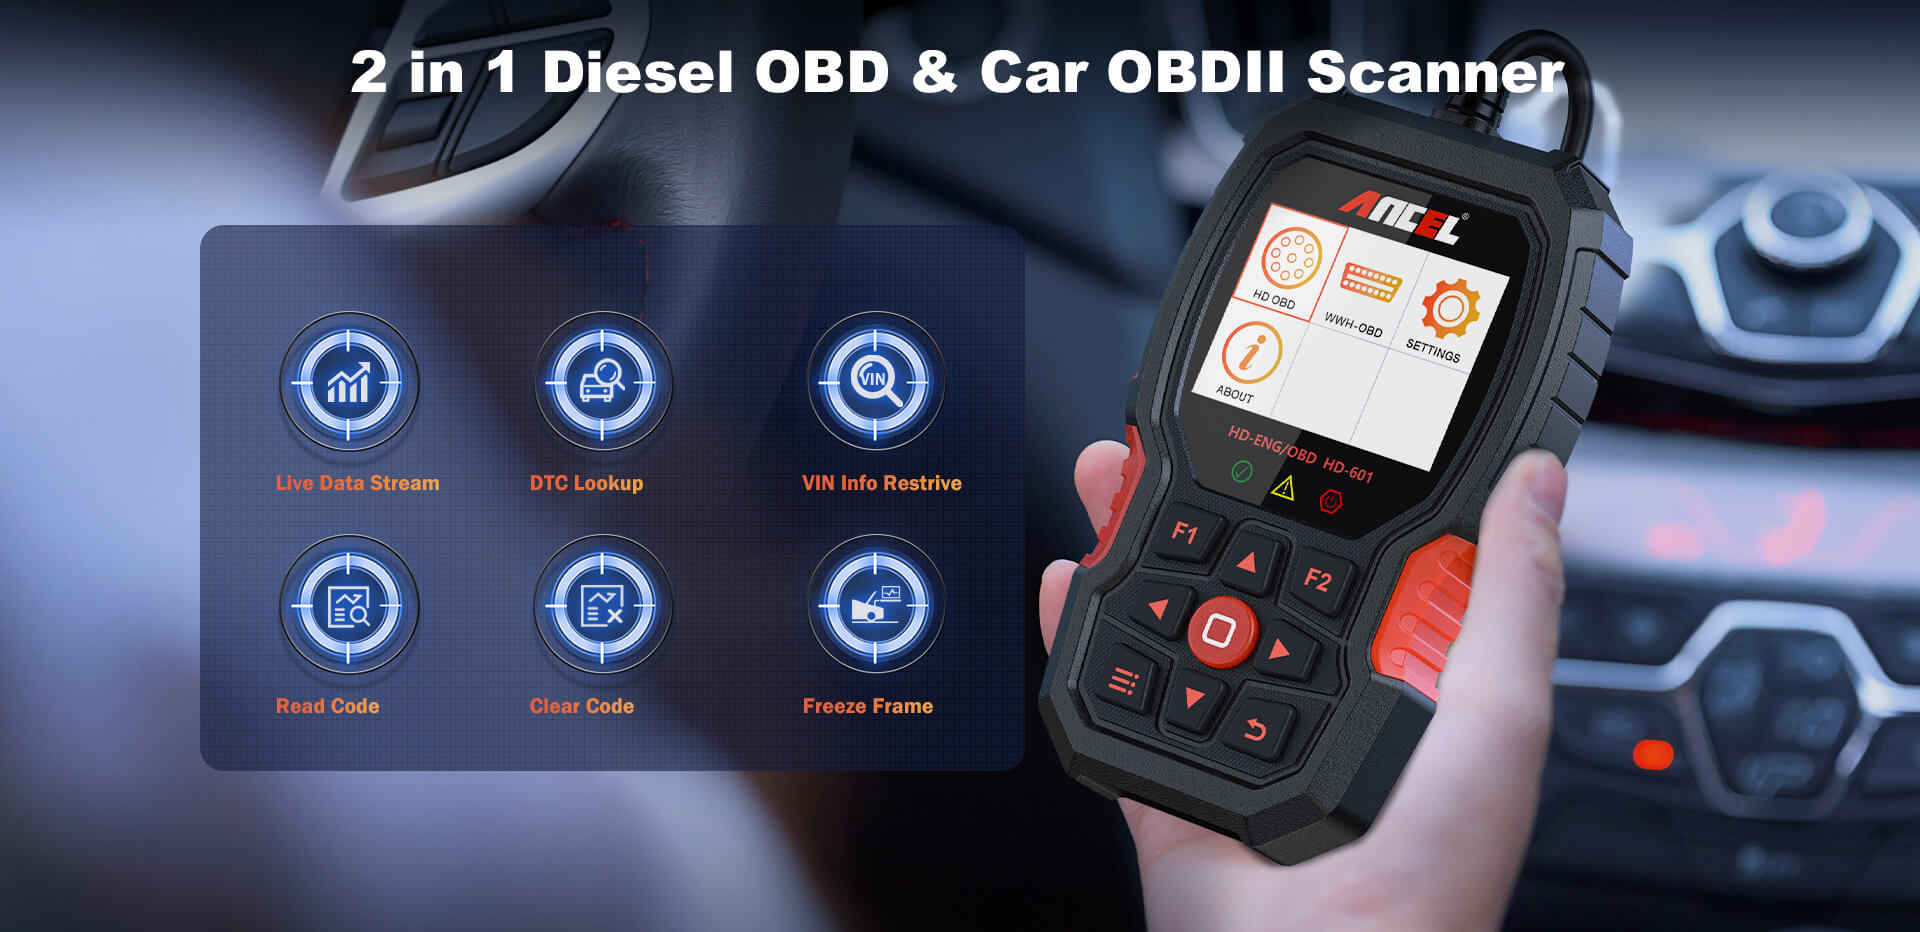 2 in 1 Diesel OBD & OBDII Scanner